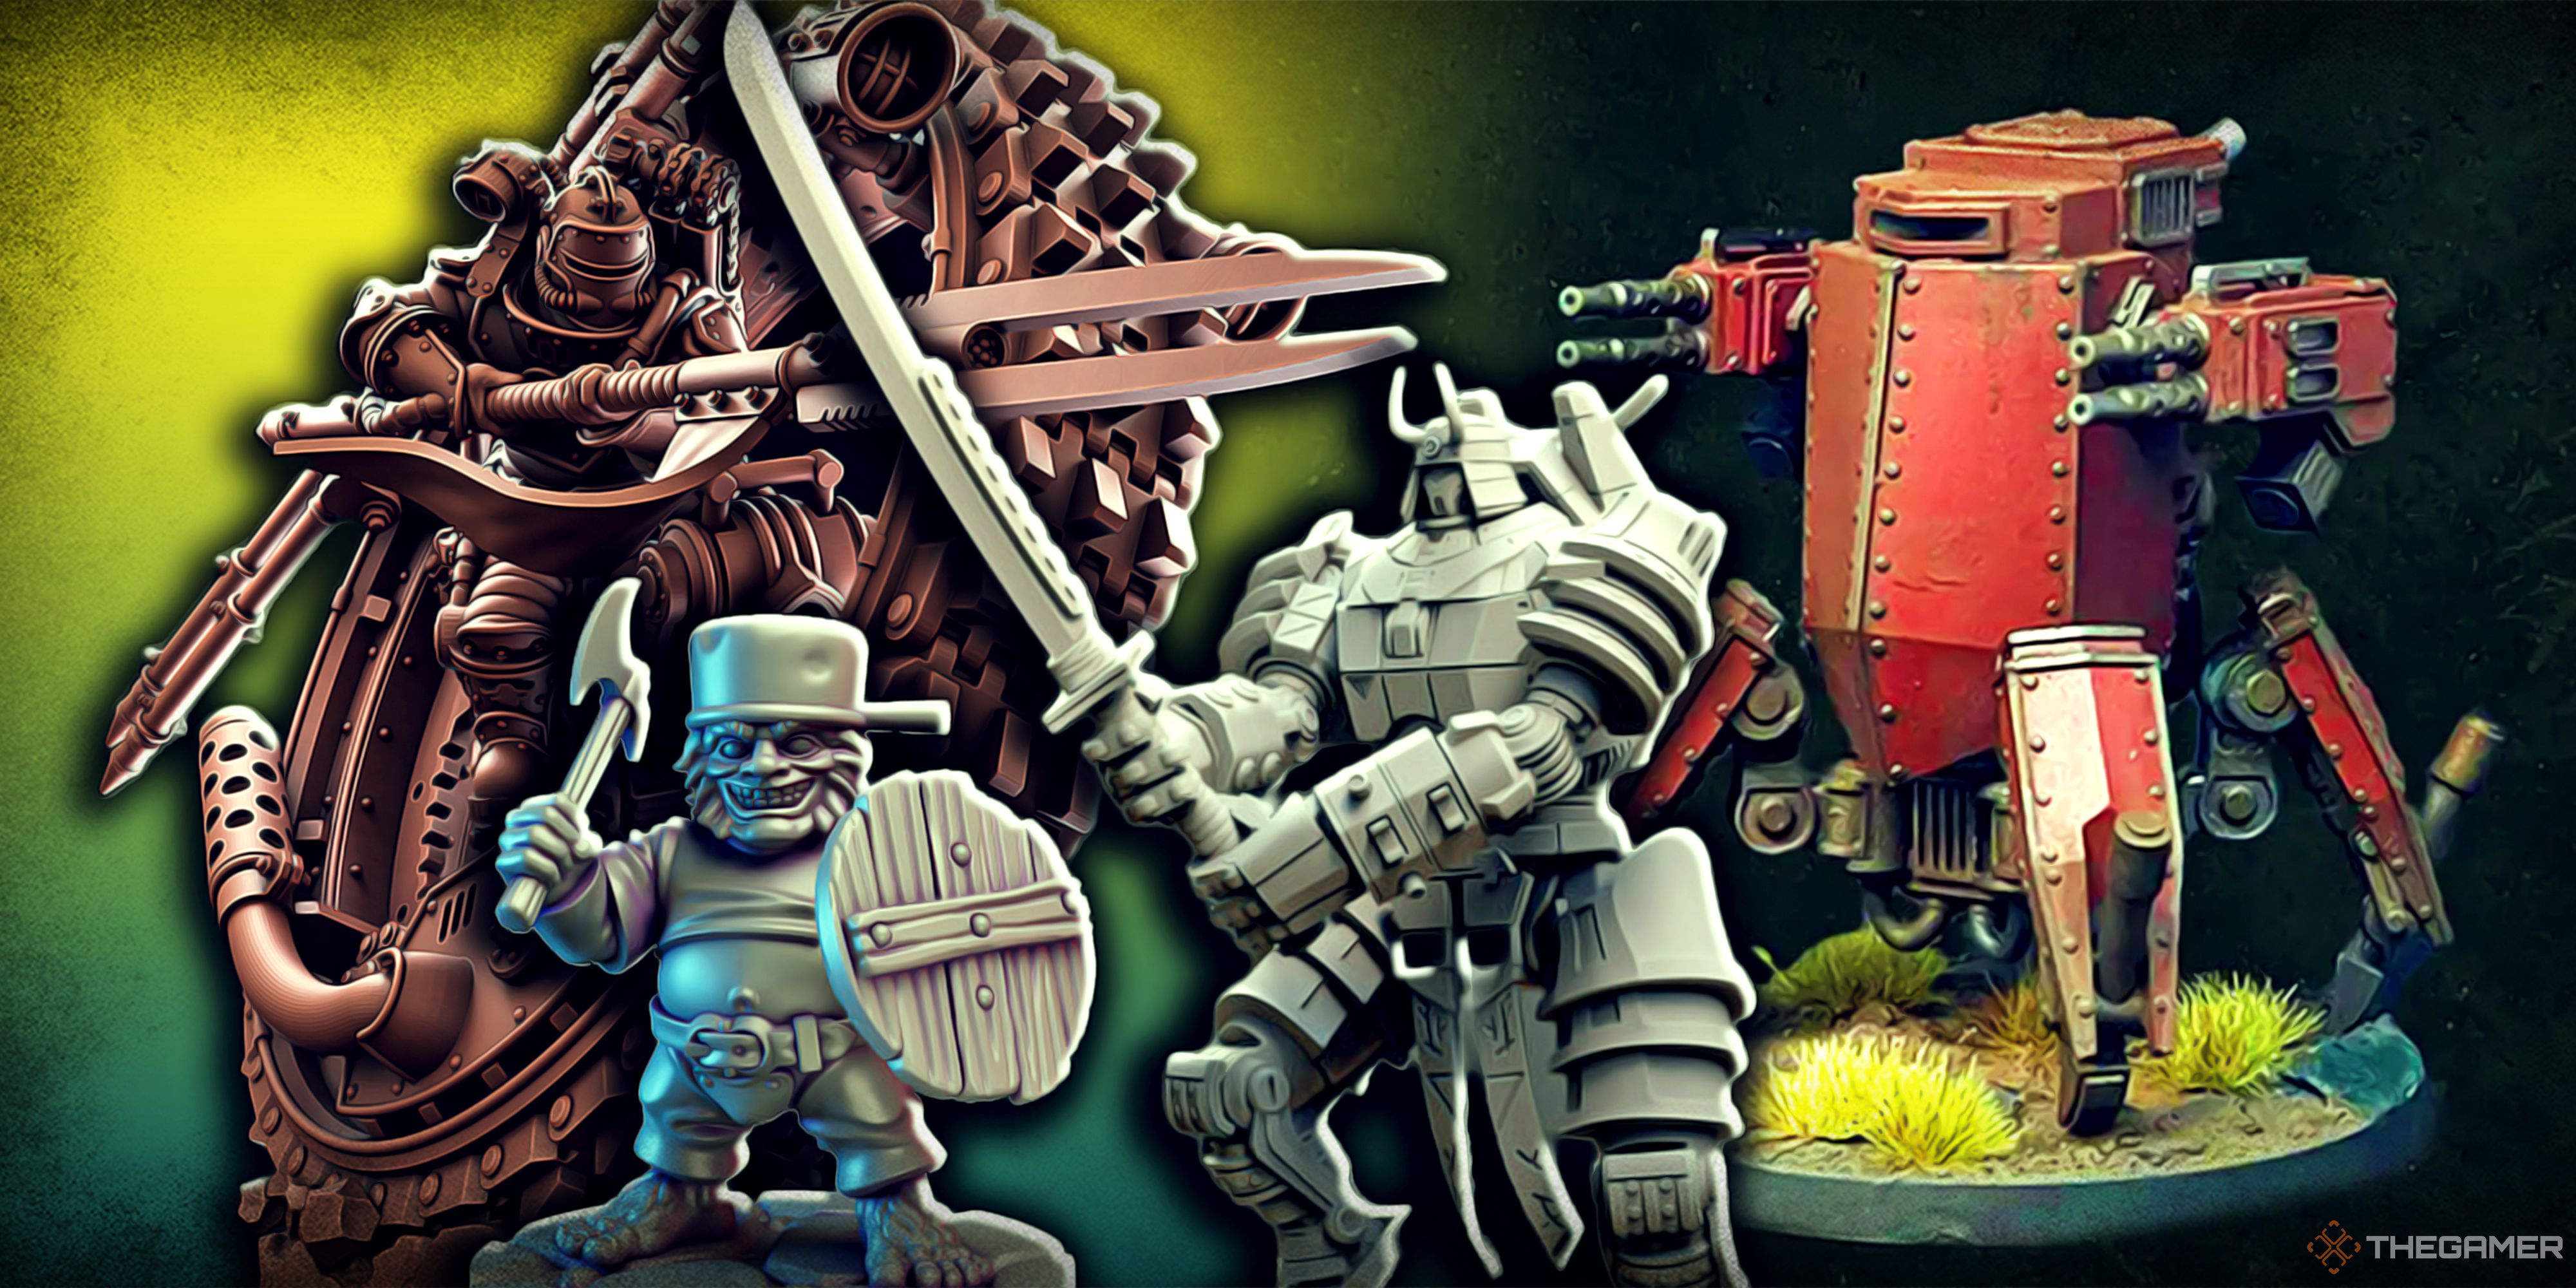 Warhammer alternative models including mechs, samurai titans, and halflings